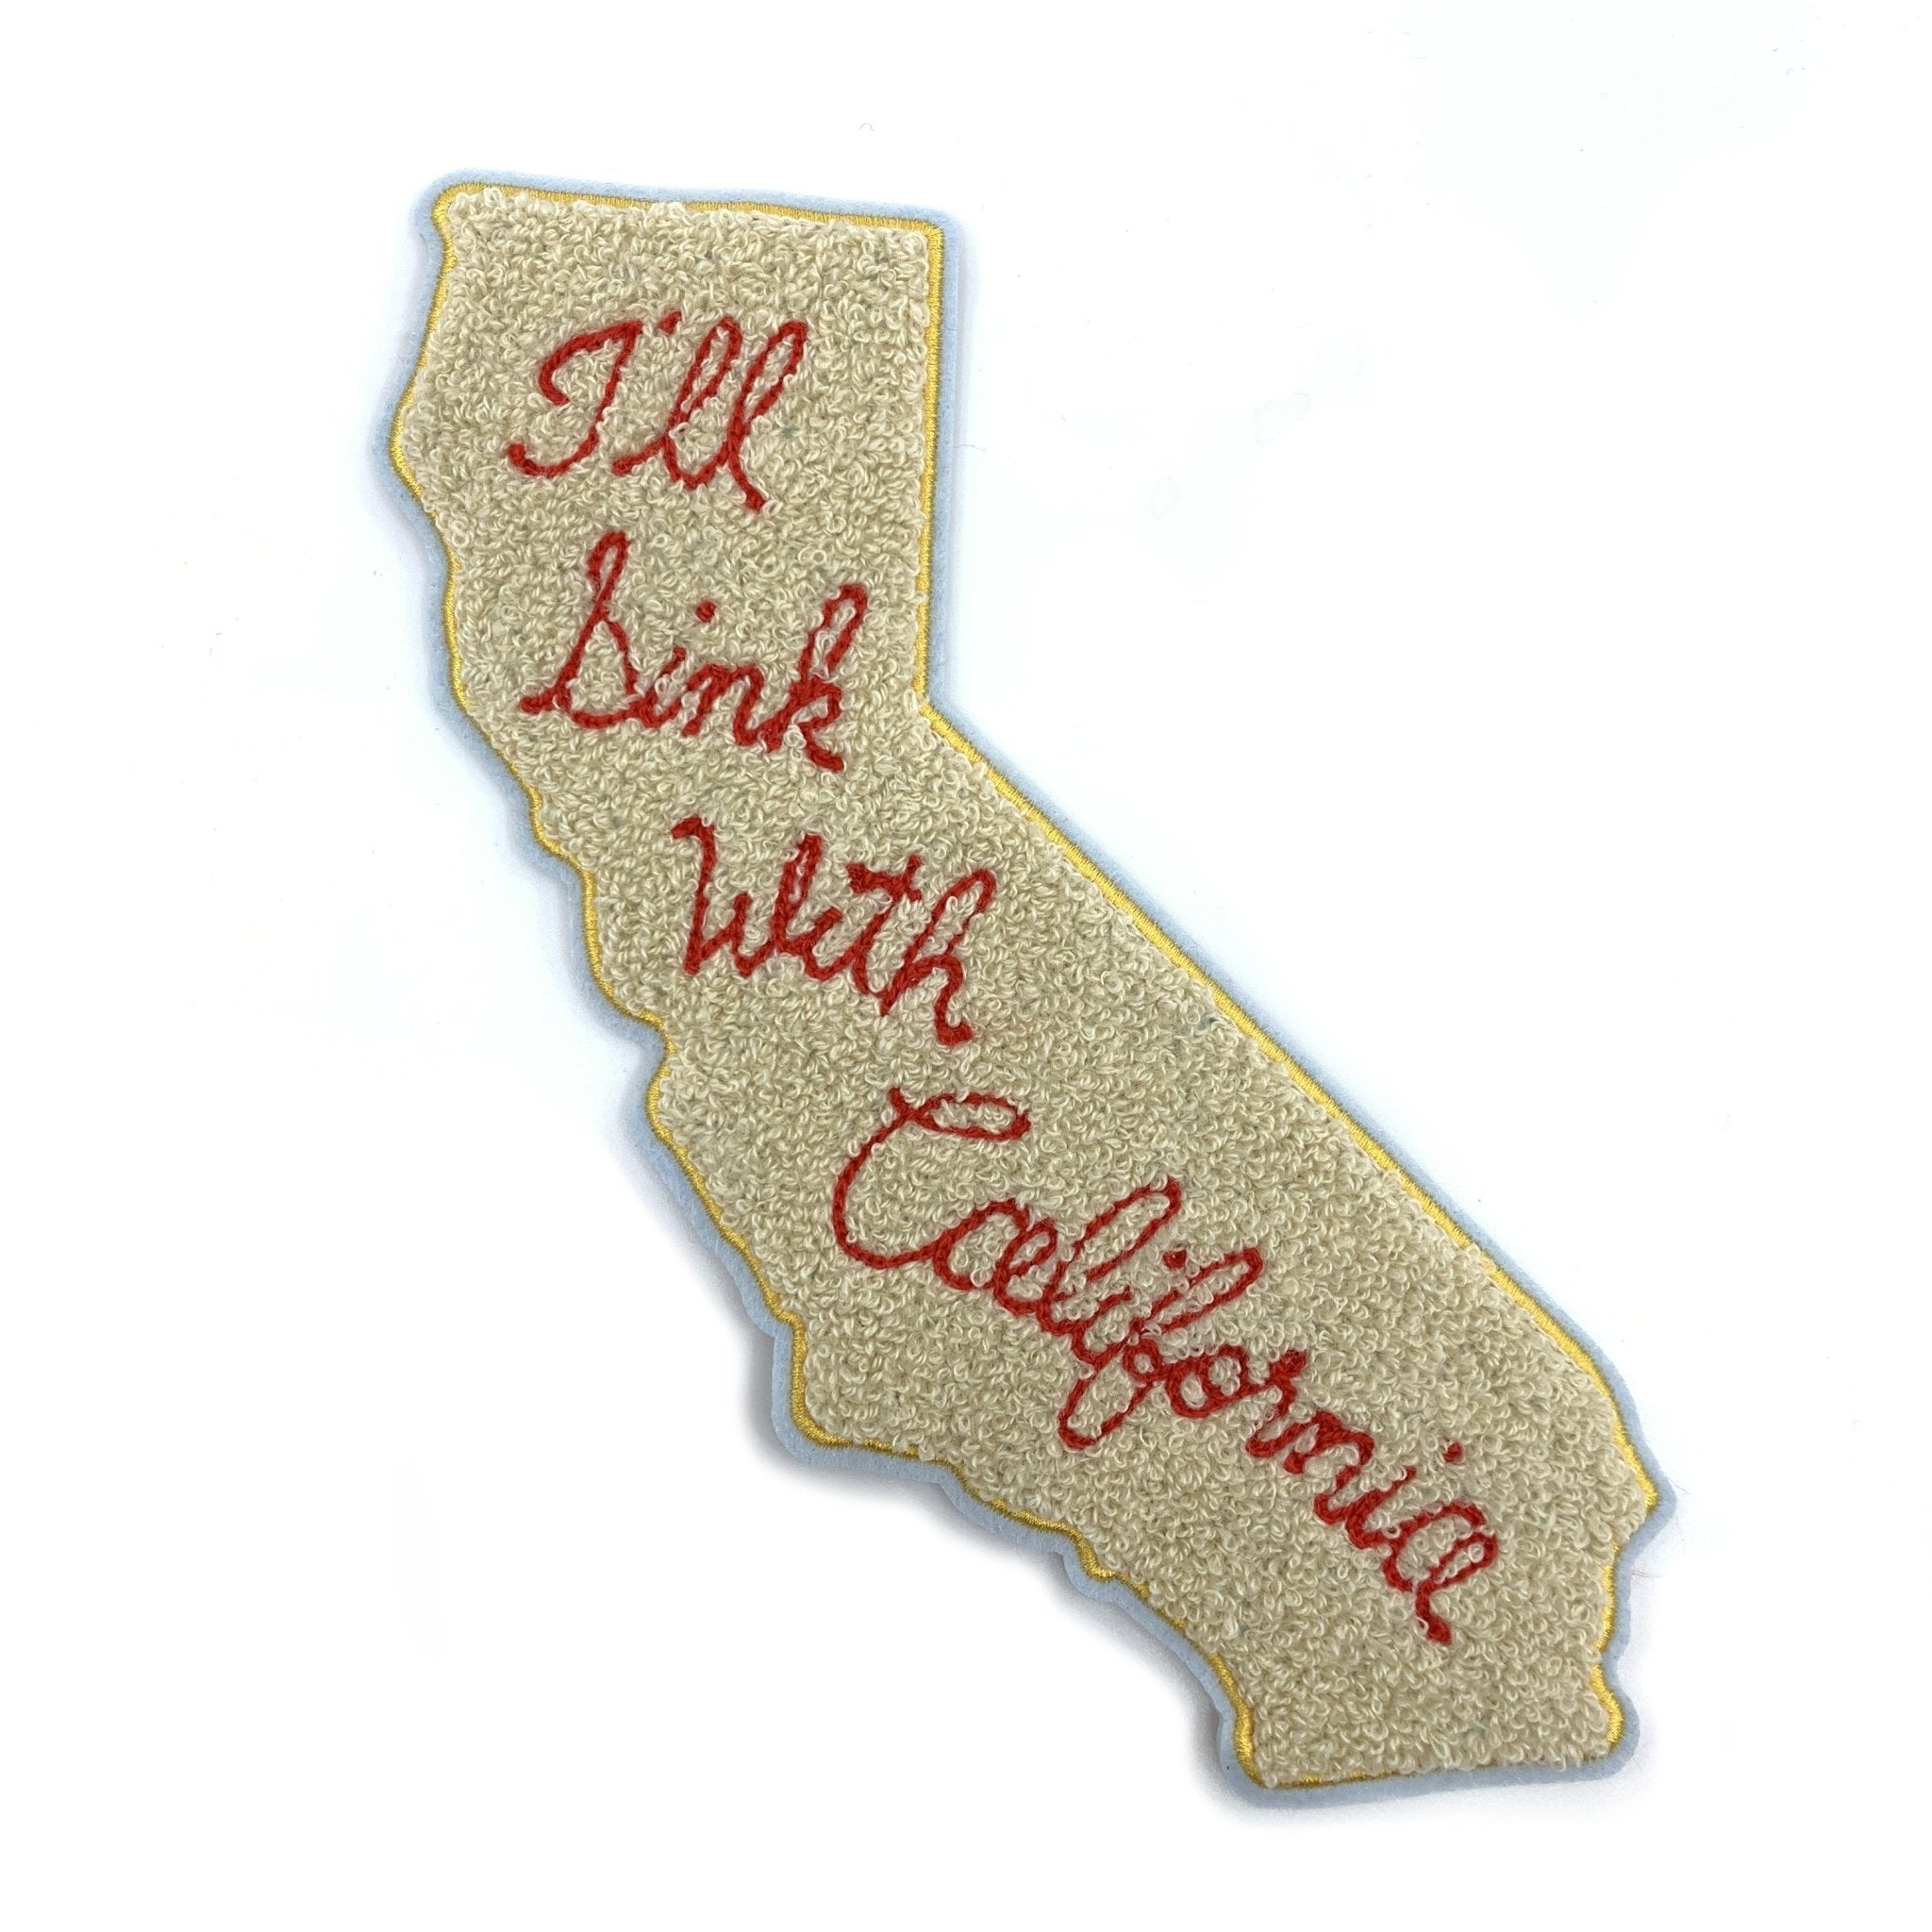 California - Patch